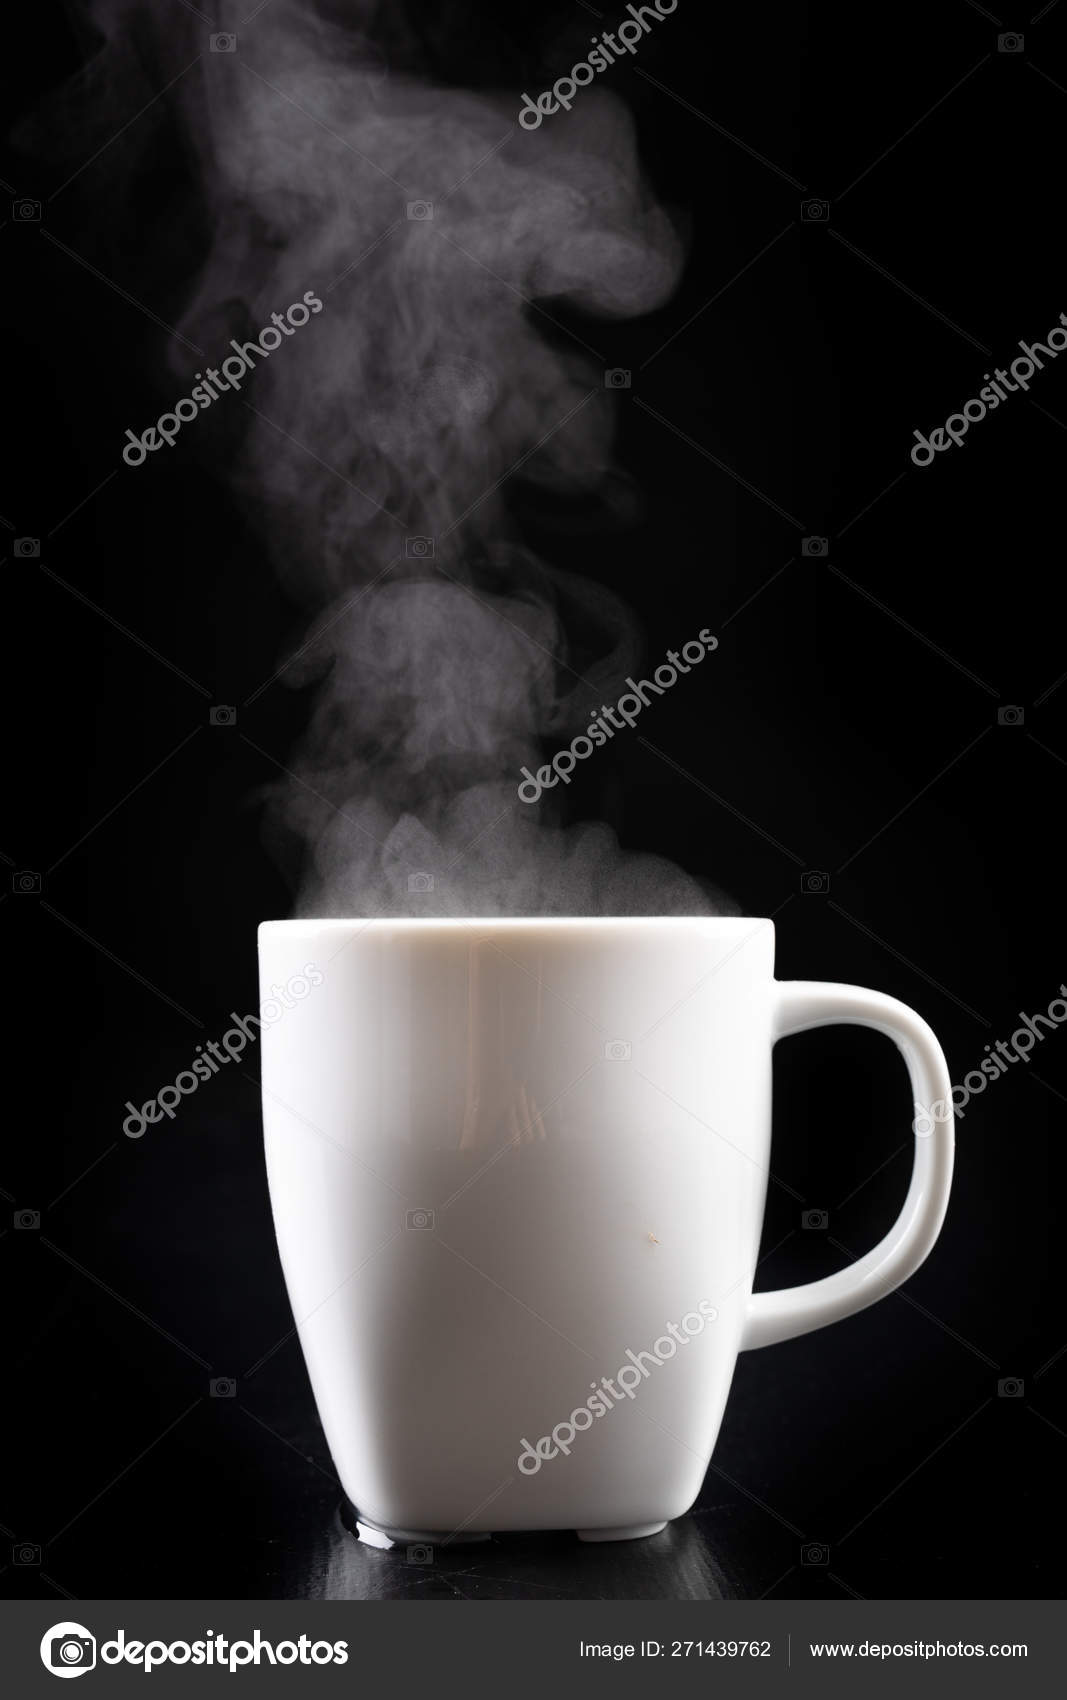 https://st4.depositphotos.com/11914024/27143/i/1600/depositphotos_271439762-stock-photo-white-mug-and-water-vapor.jpg